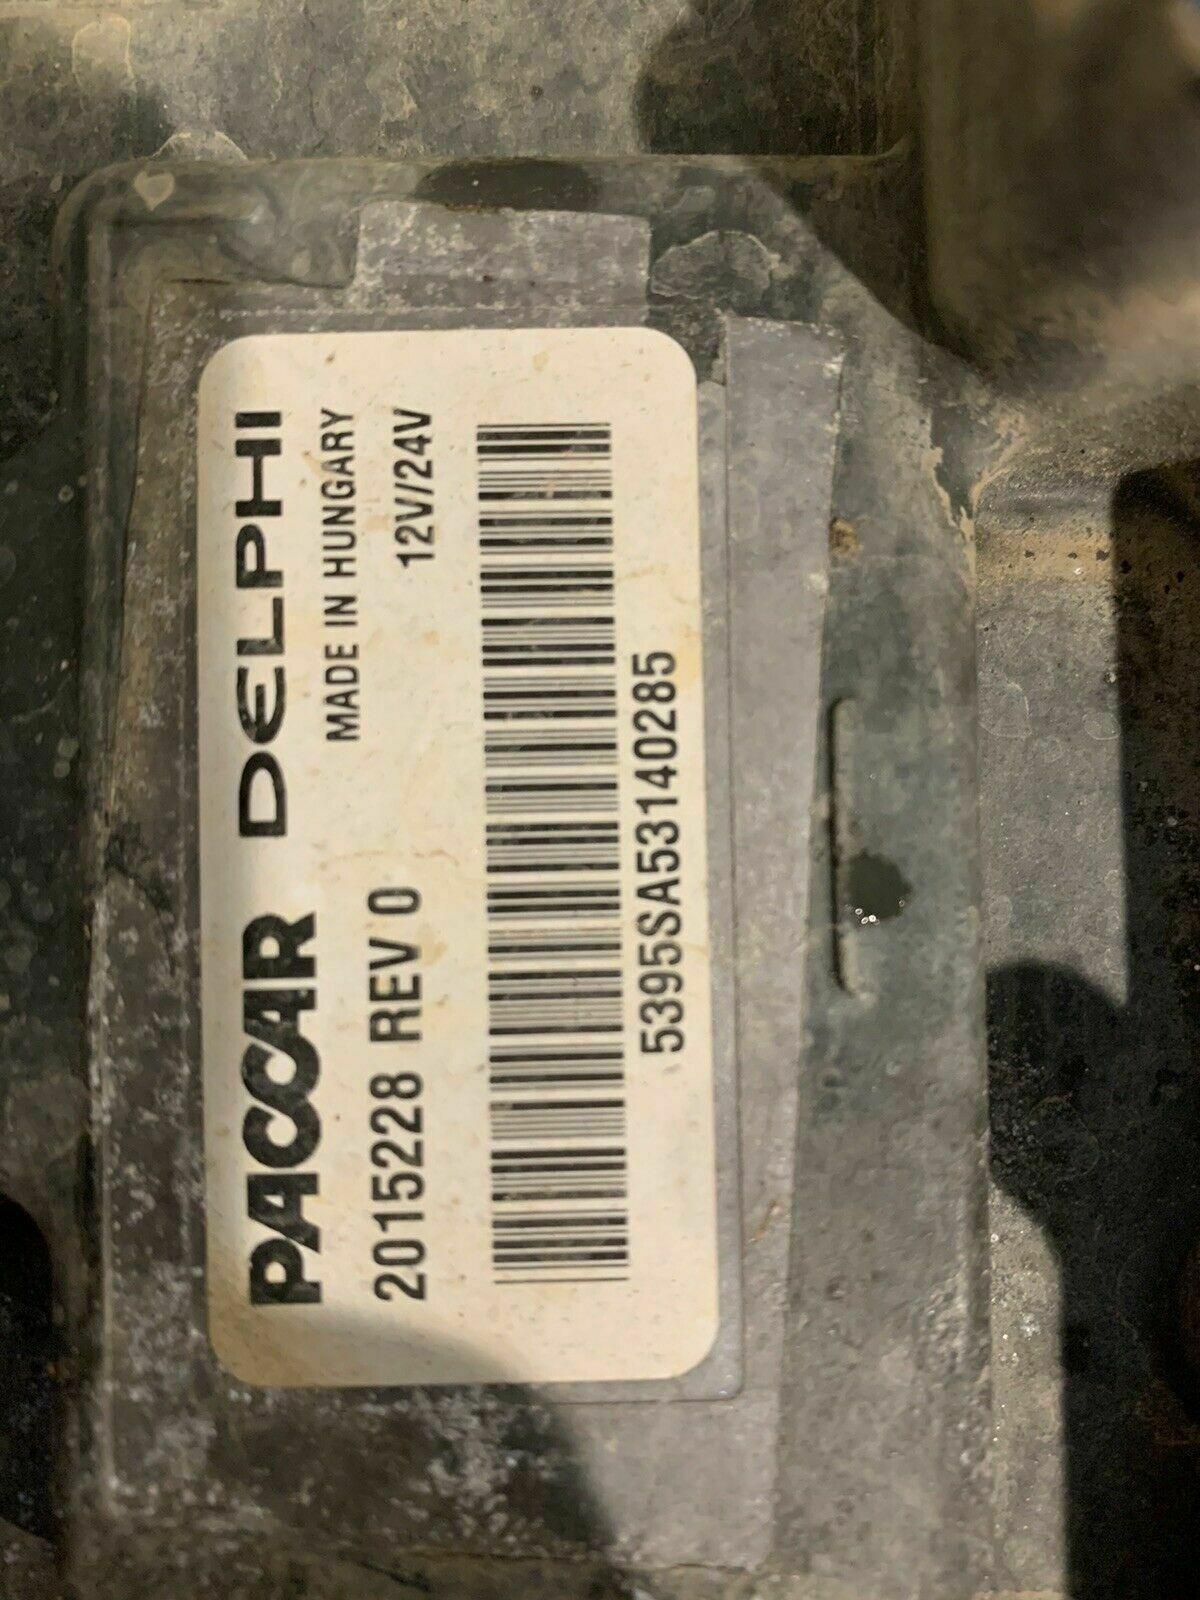 2015228 Genuine Paccar® Ecm Engine Control Module For Mx-13 - ADVANCED TRUCK PARTS